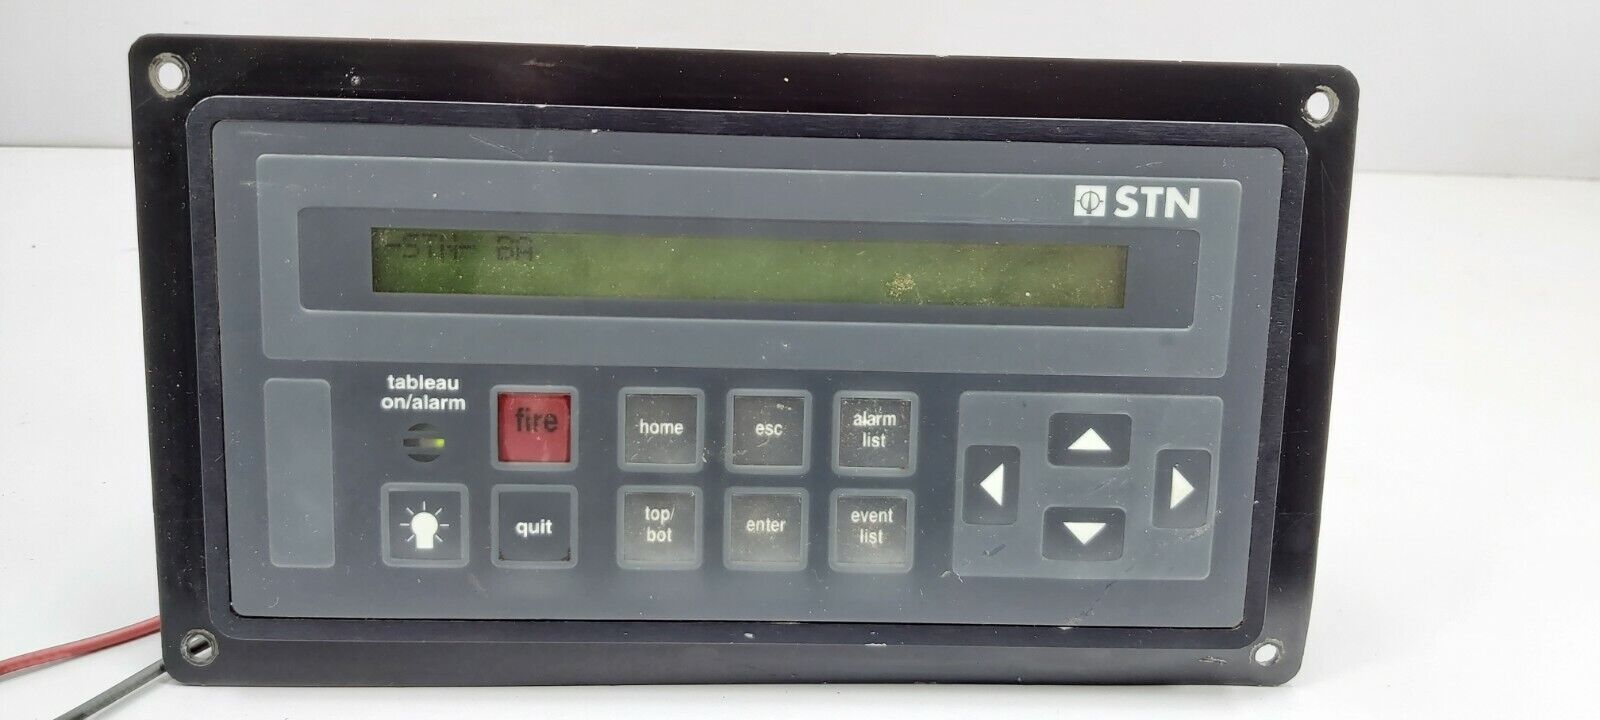 STN Systemtechnik Nord GMBH C4338 BAT426 B Diesel Management Unit Alarm Panel   